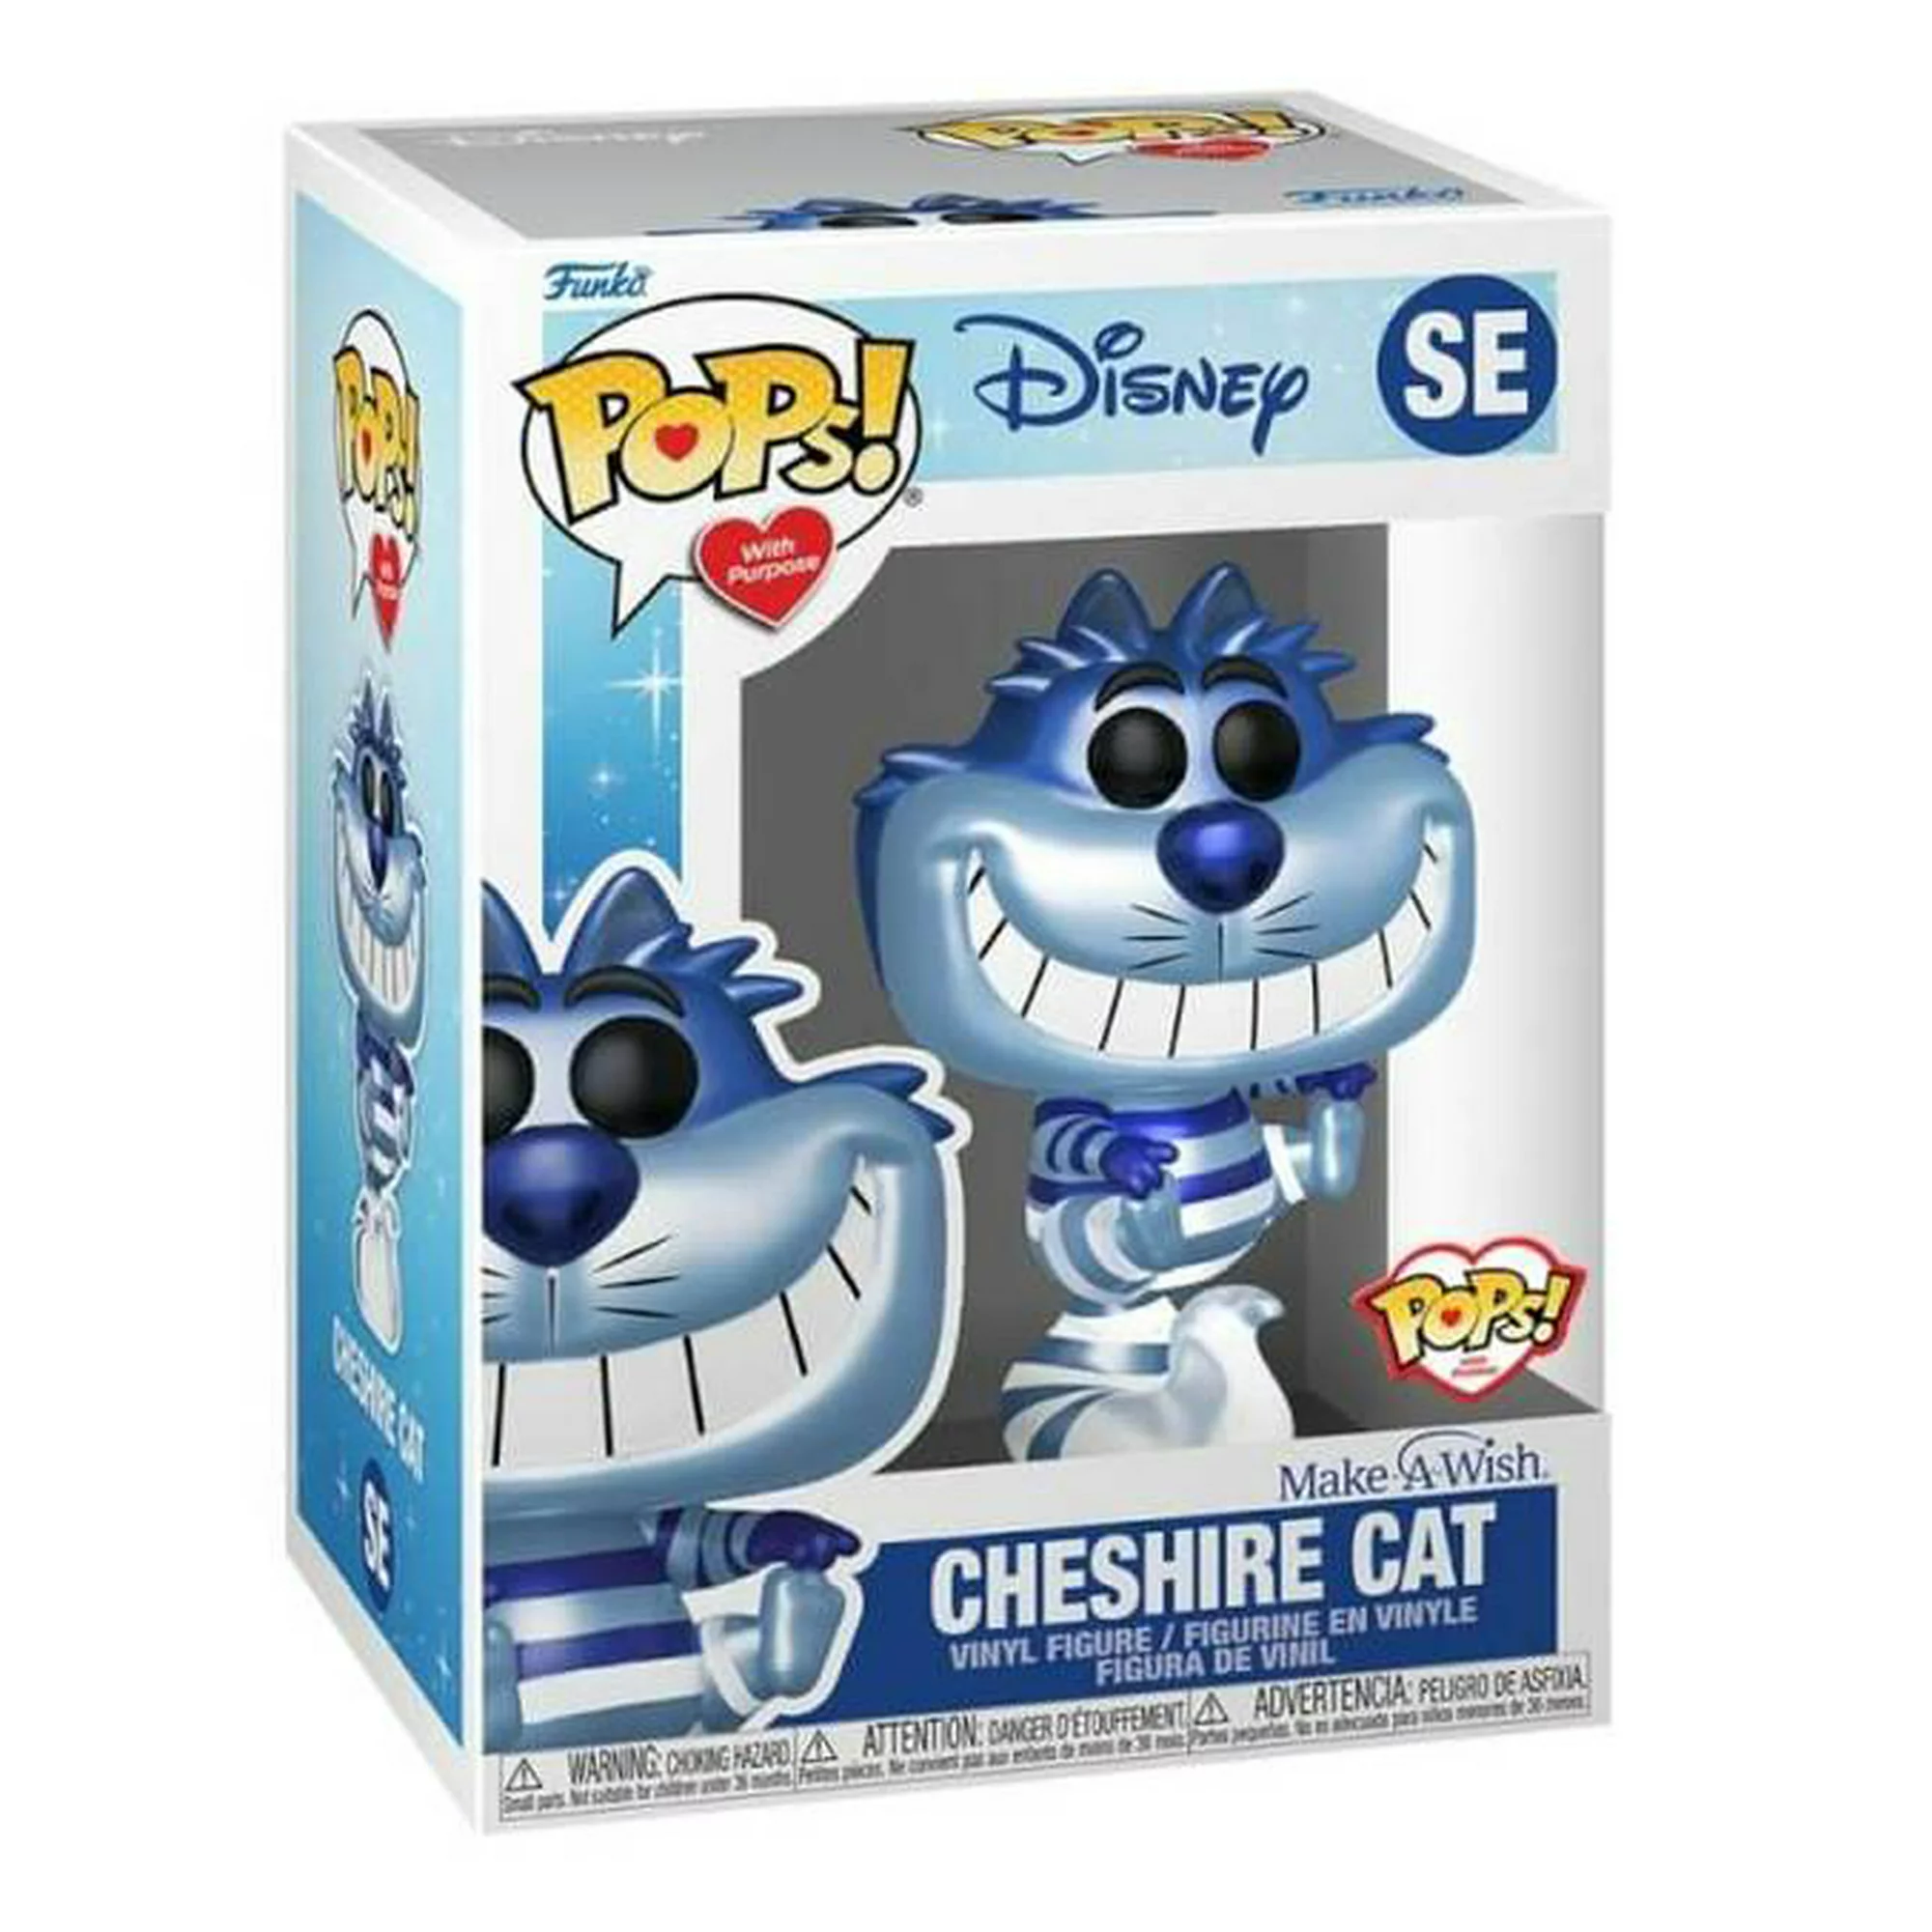 Funko Pop! Disney: Cheshire Cat SE Make a Wish